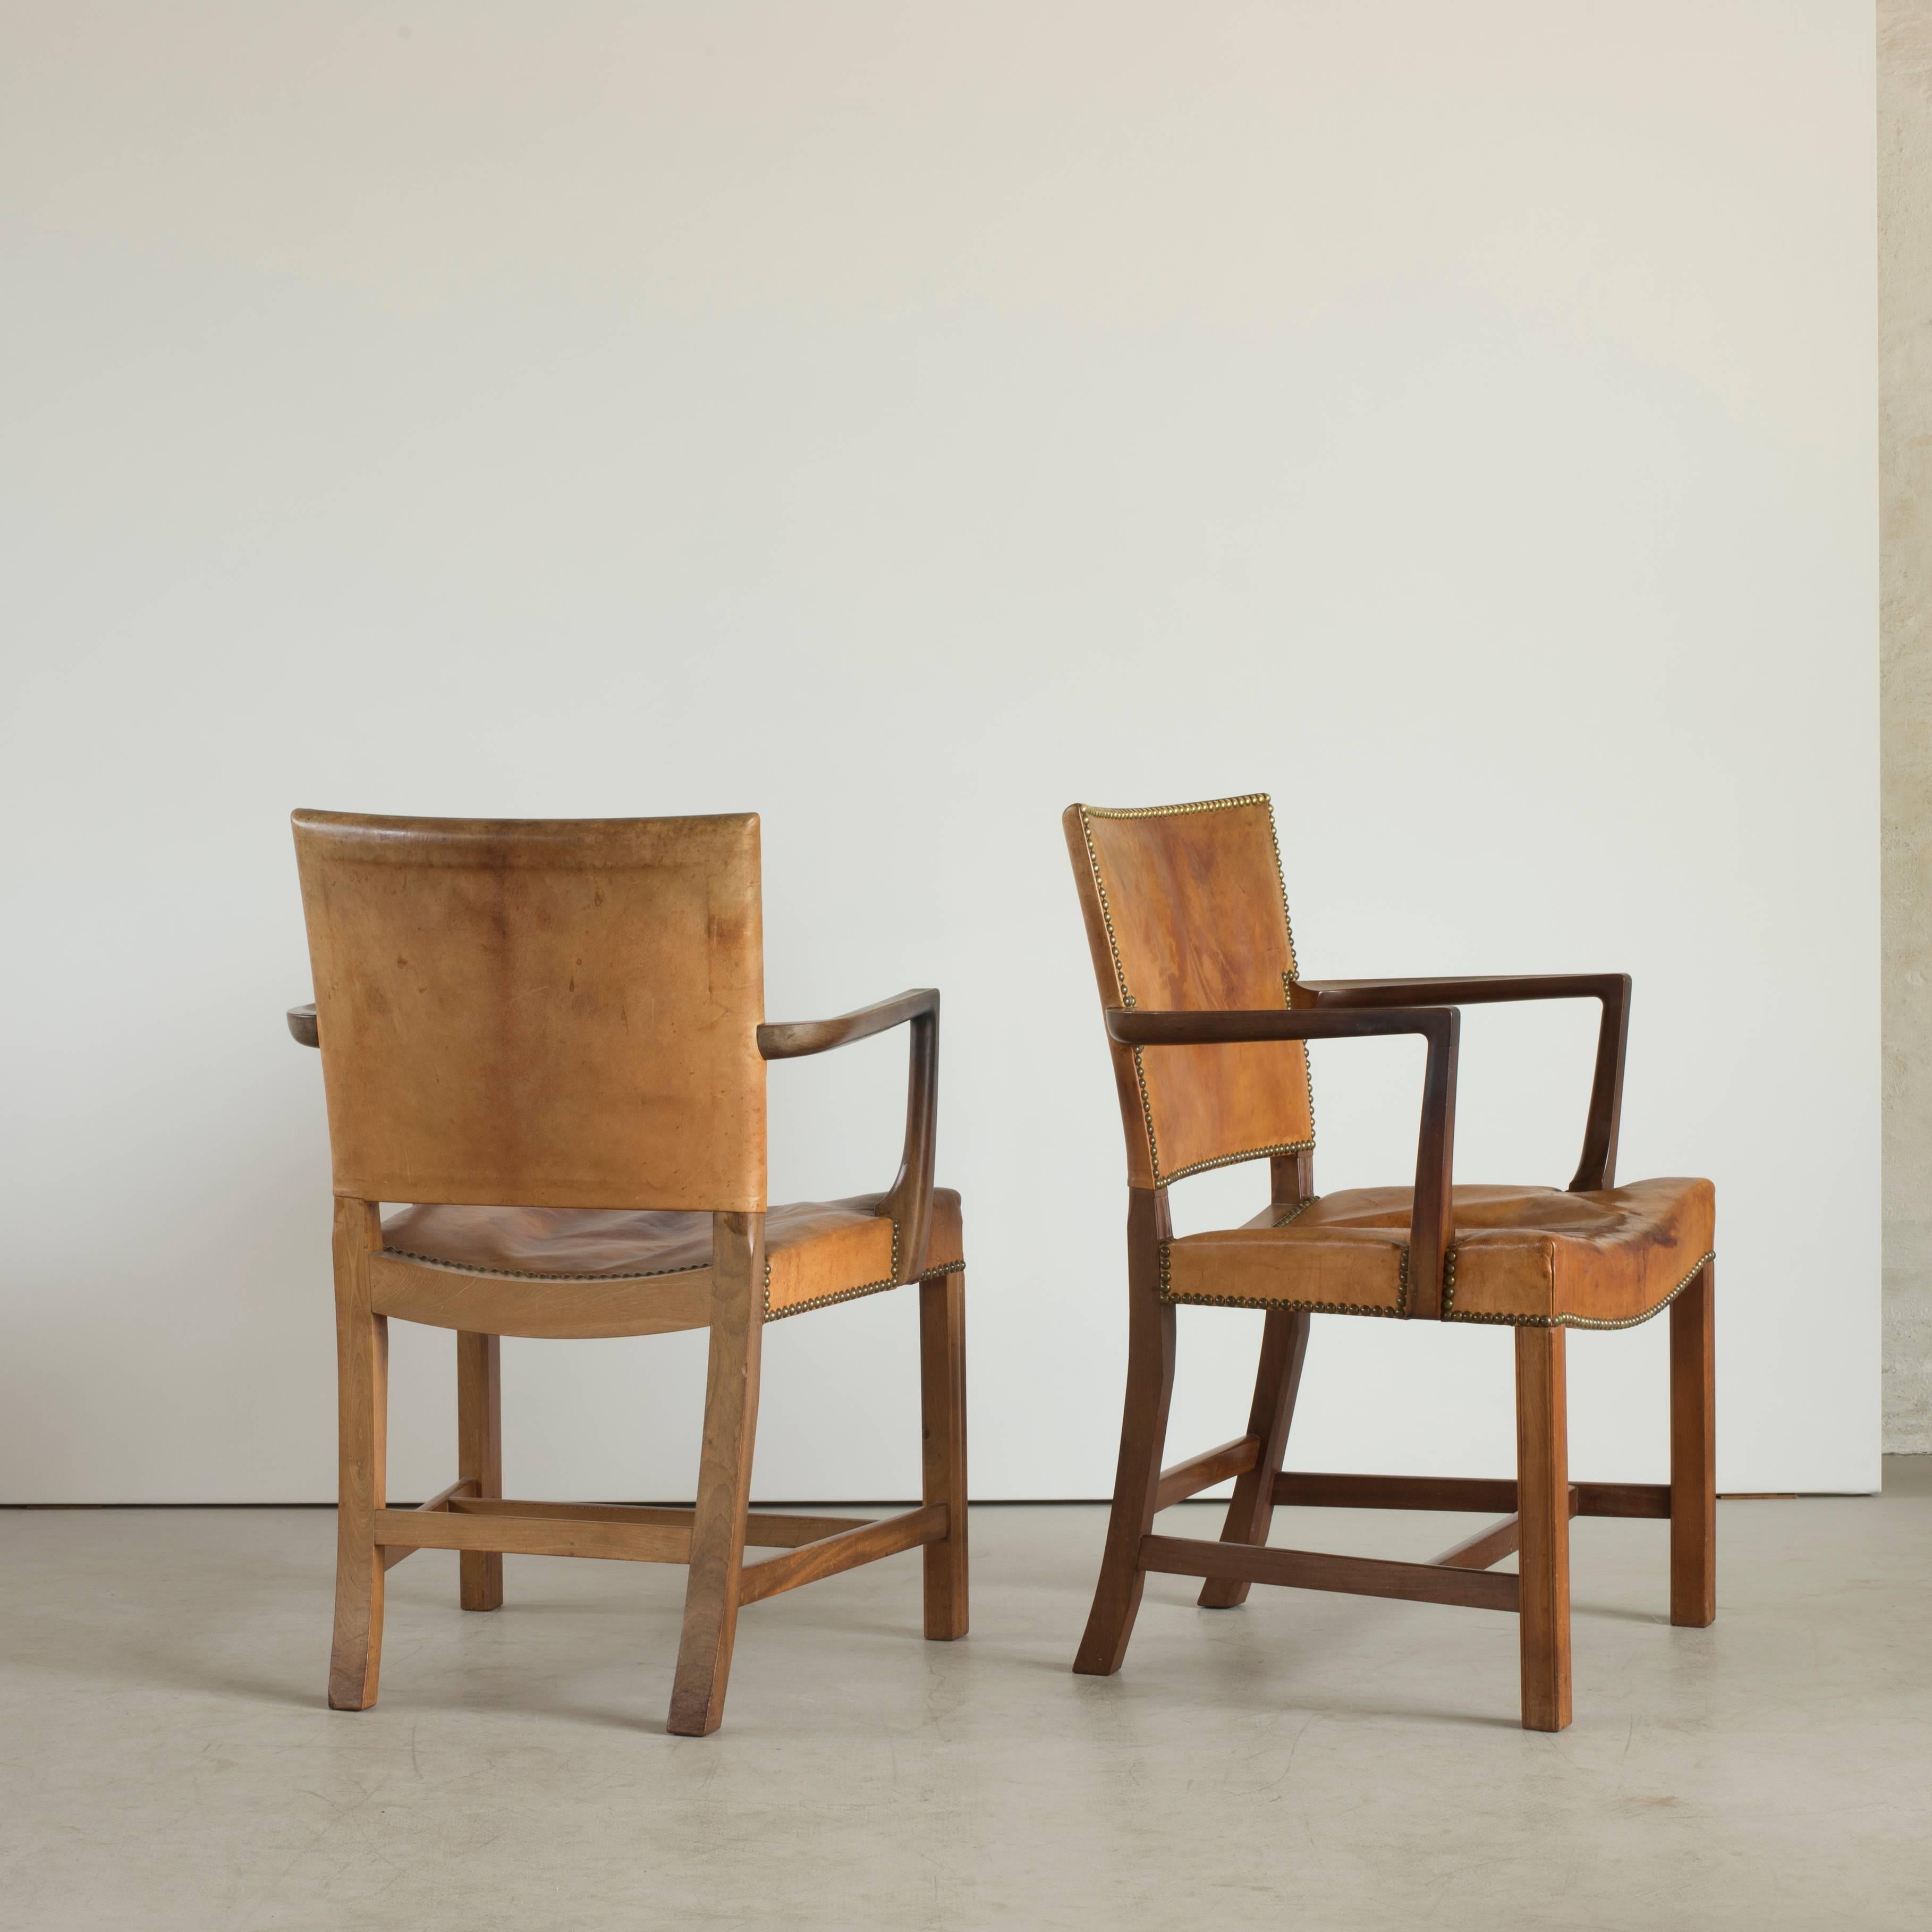 Pair of Kaare Klint armchairs in Cuban mahogany and Niger leather. Executed by Rud. Rasmussen, 1930s.

Reverse with paper label ‘RUD. RASMUSSEN/SNEDKERIER/45 NØRREBROGADE/KØBENHAVN.